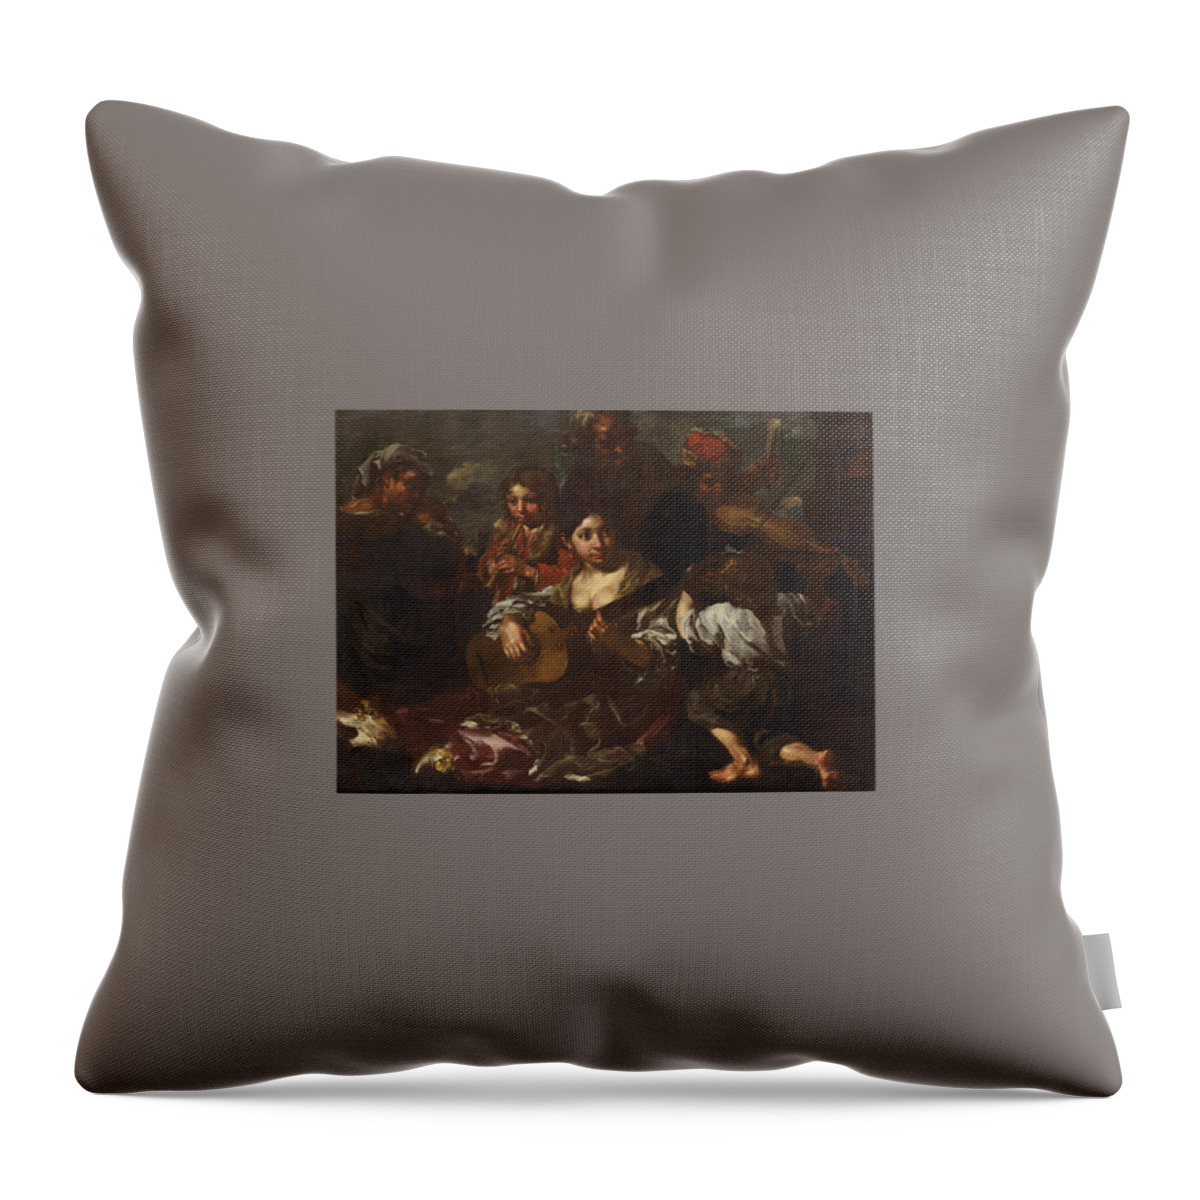 Bernhard Keil Throw Pillow featuring the painting Called Monsu Bernardo by MotionAge Designs